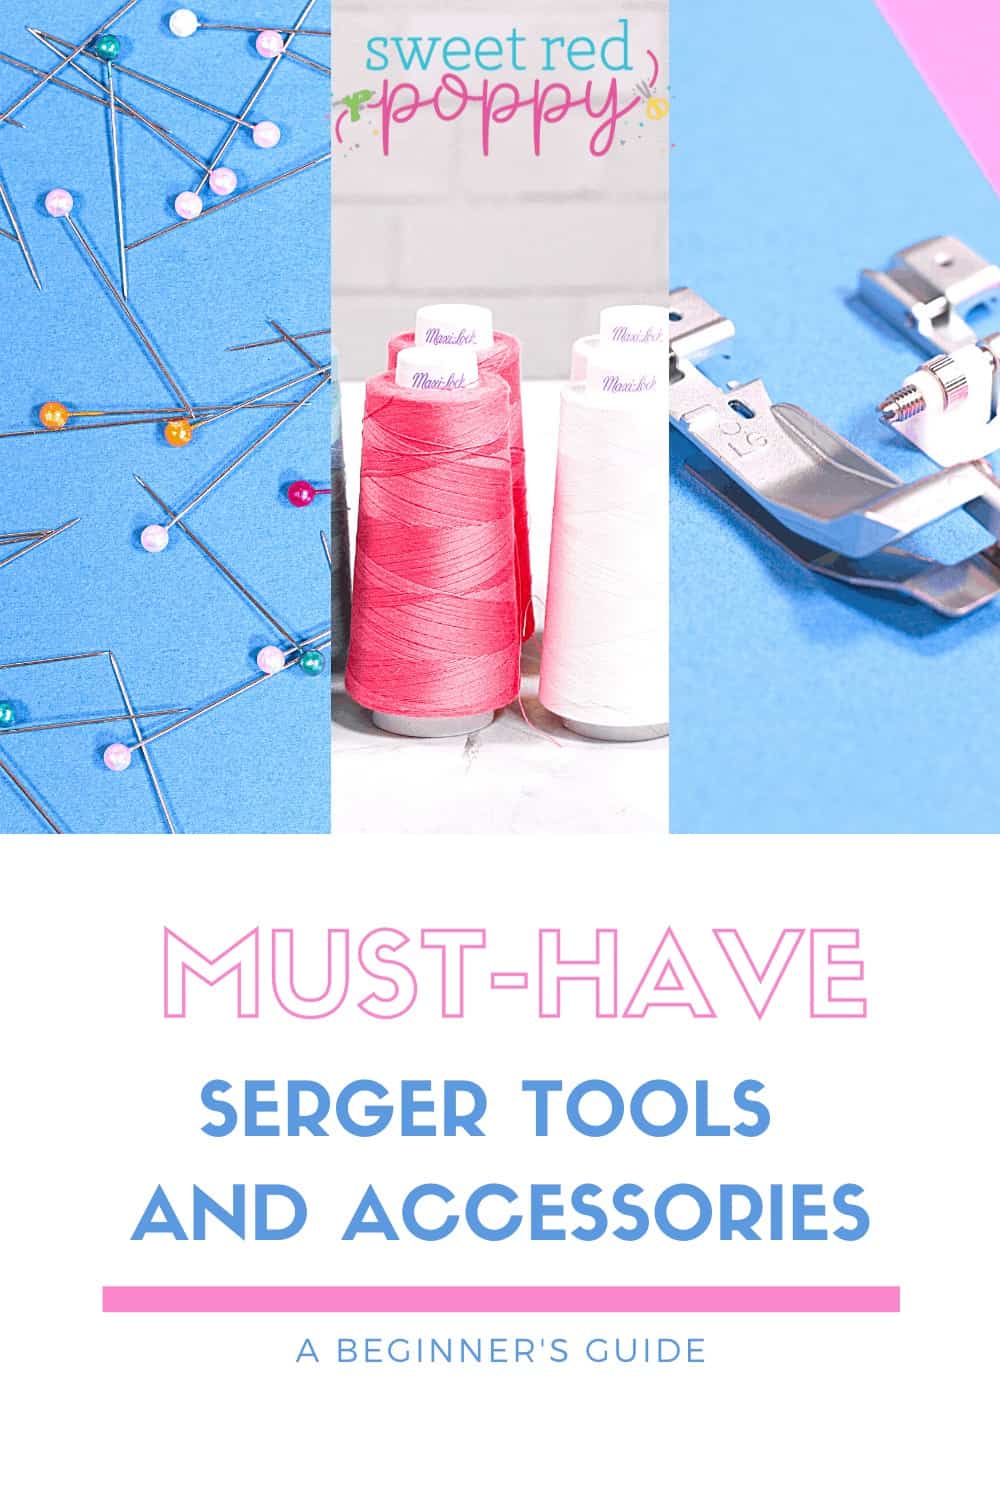 Serger Machine Tools, US sewing